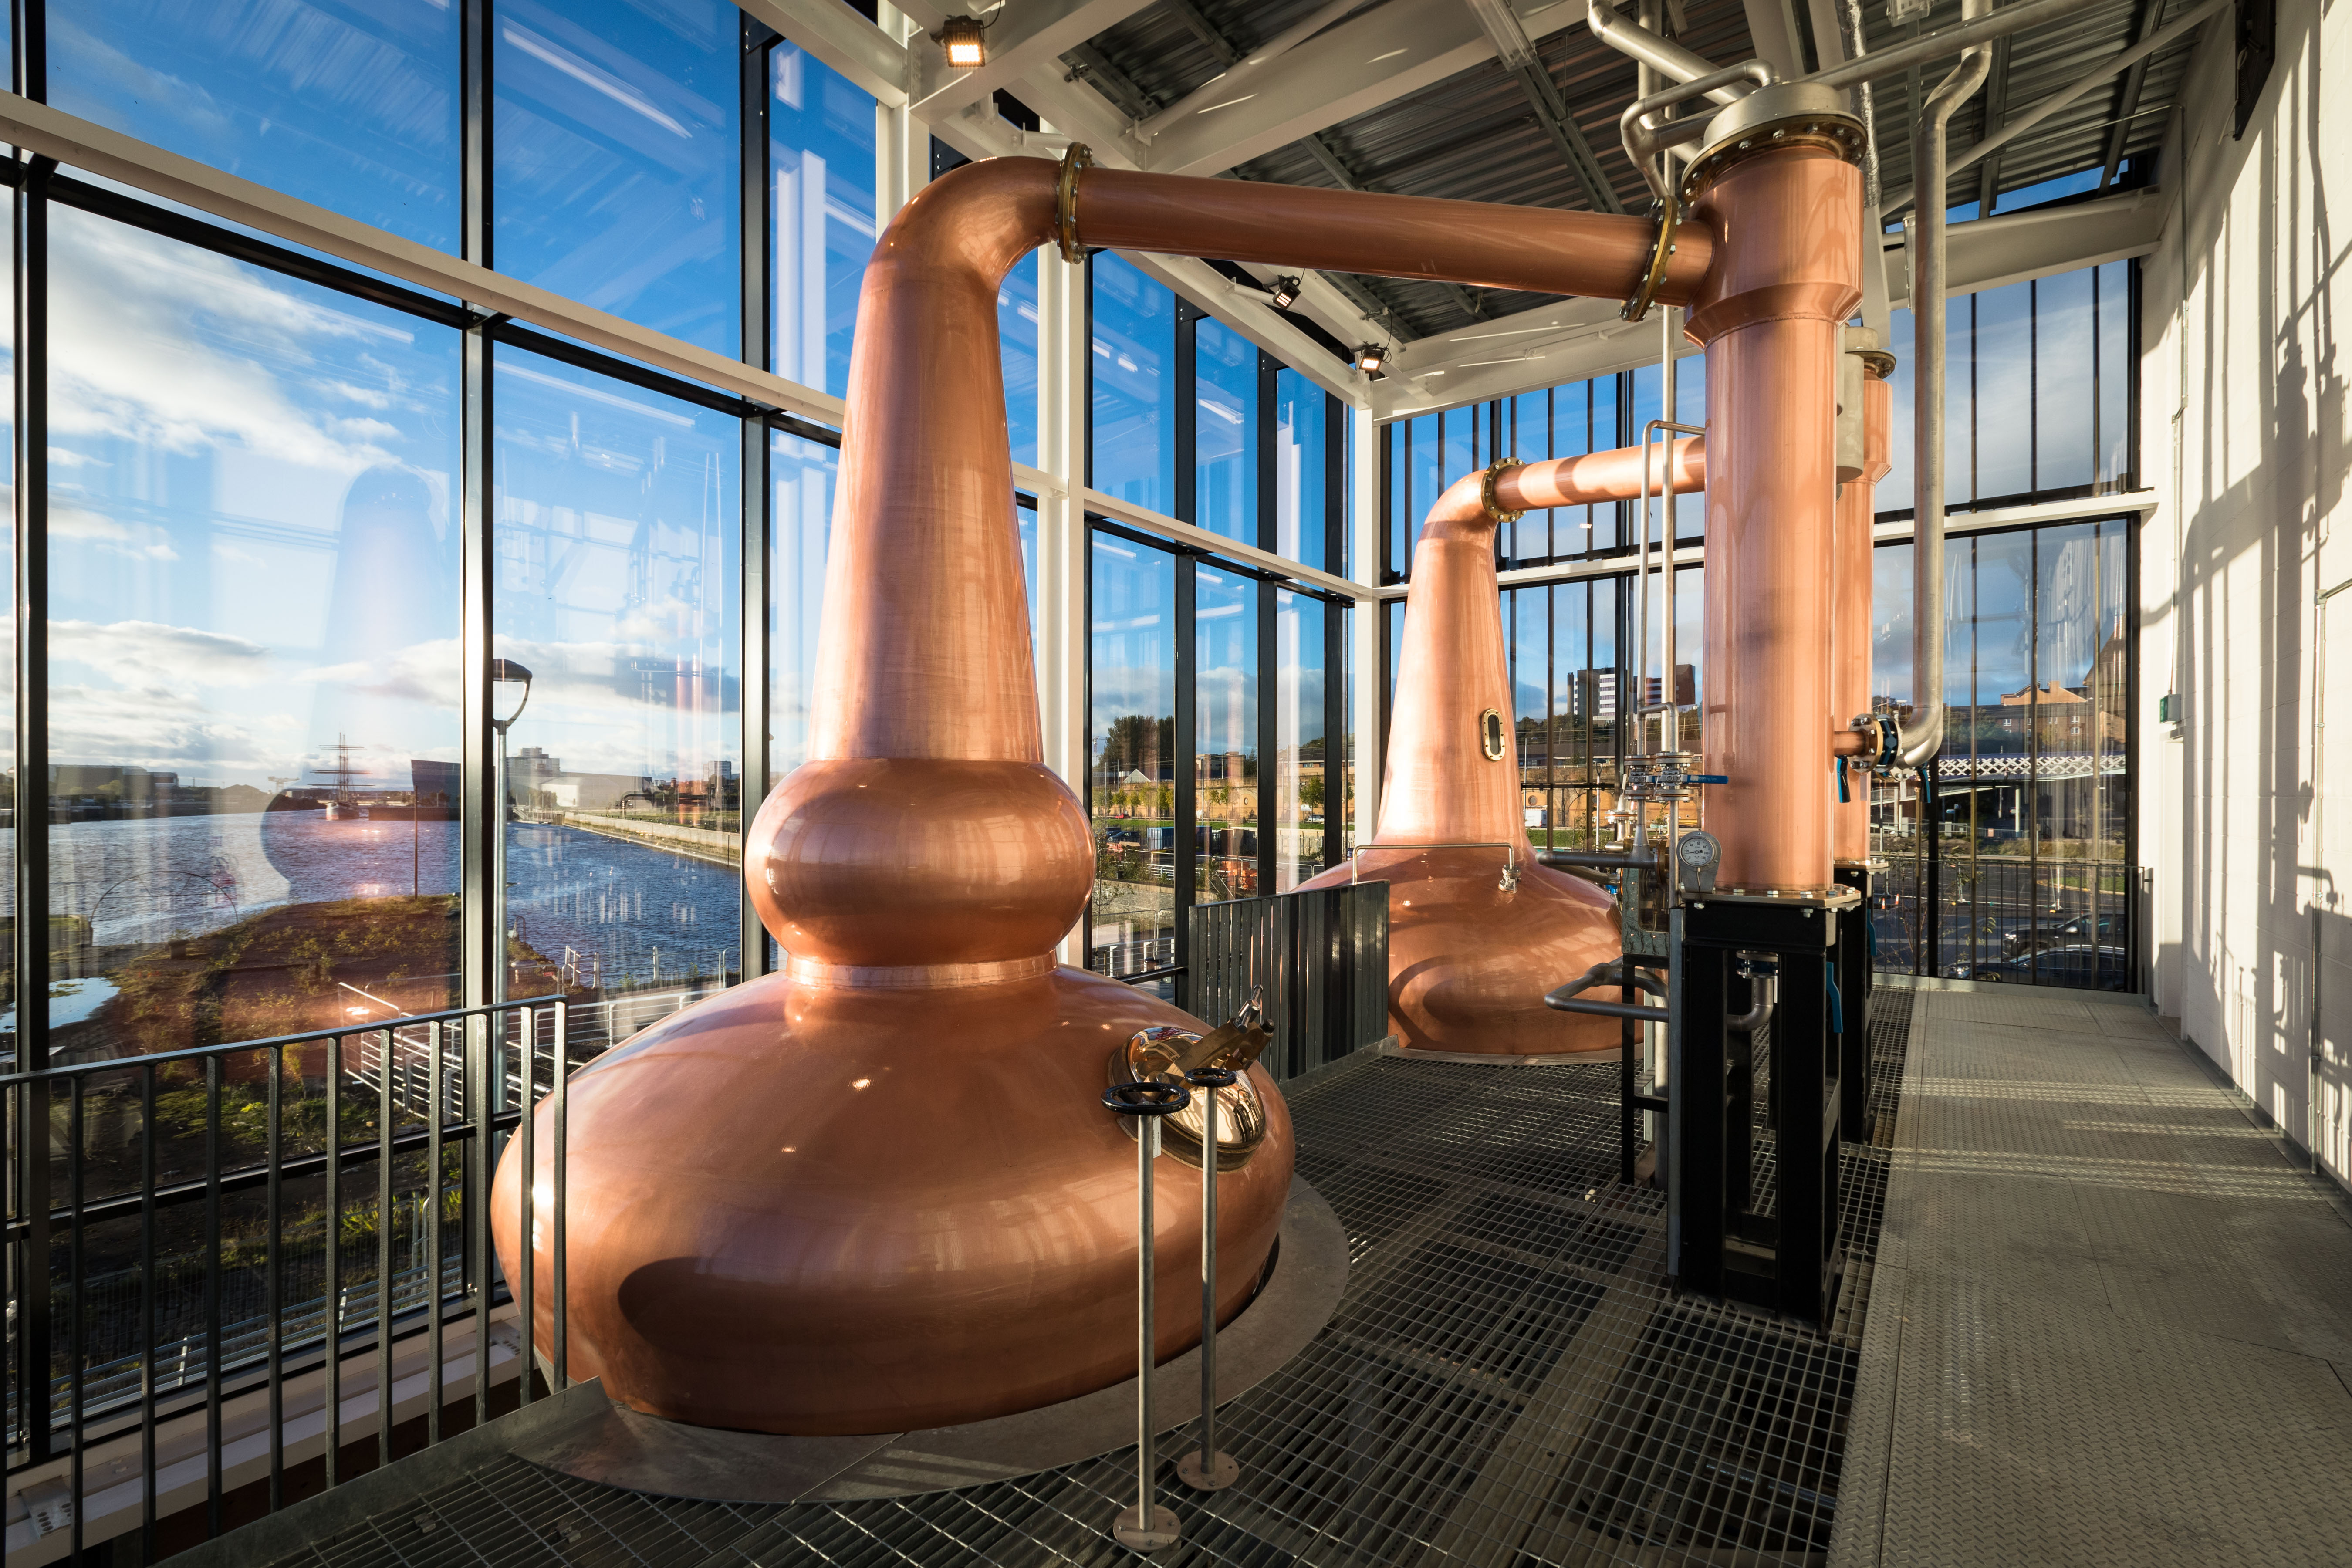 Inside the Clydeside Distillery